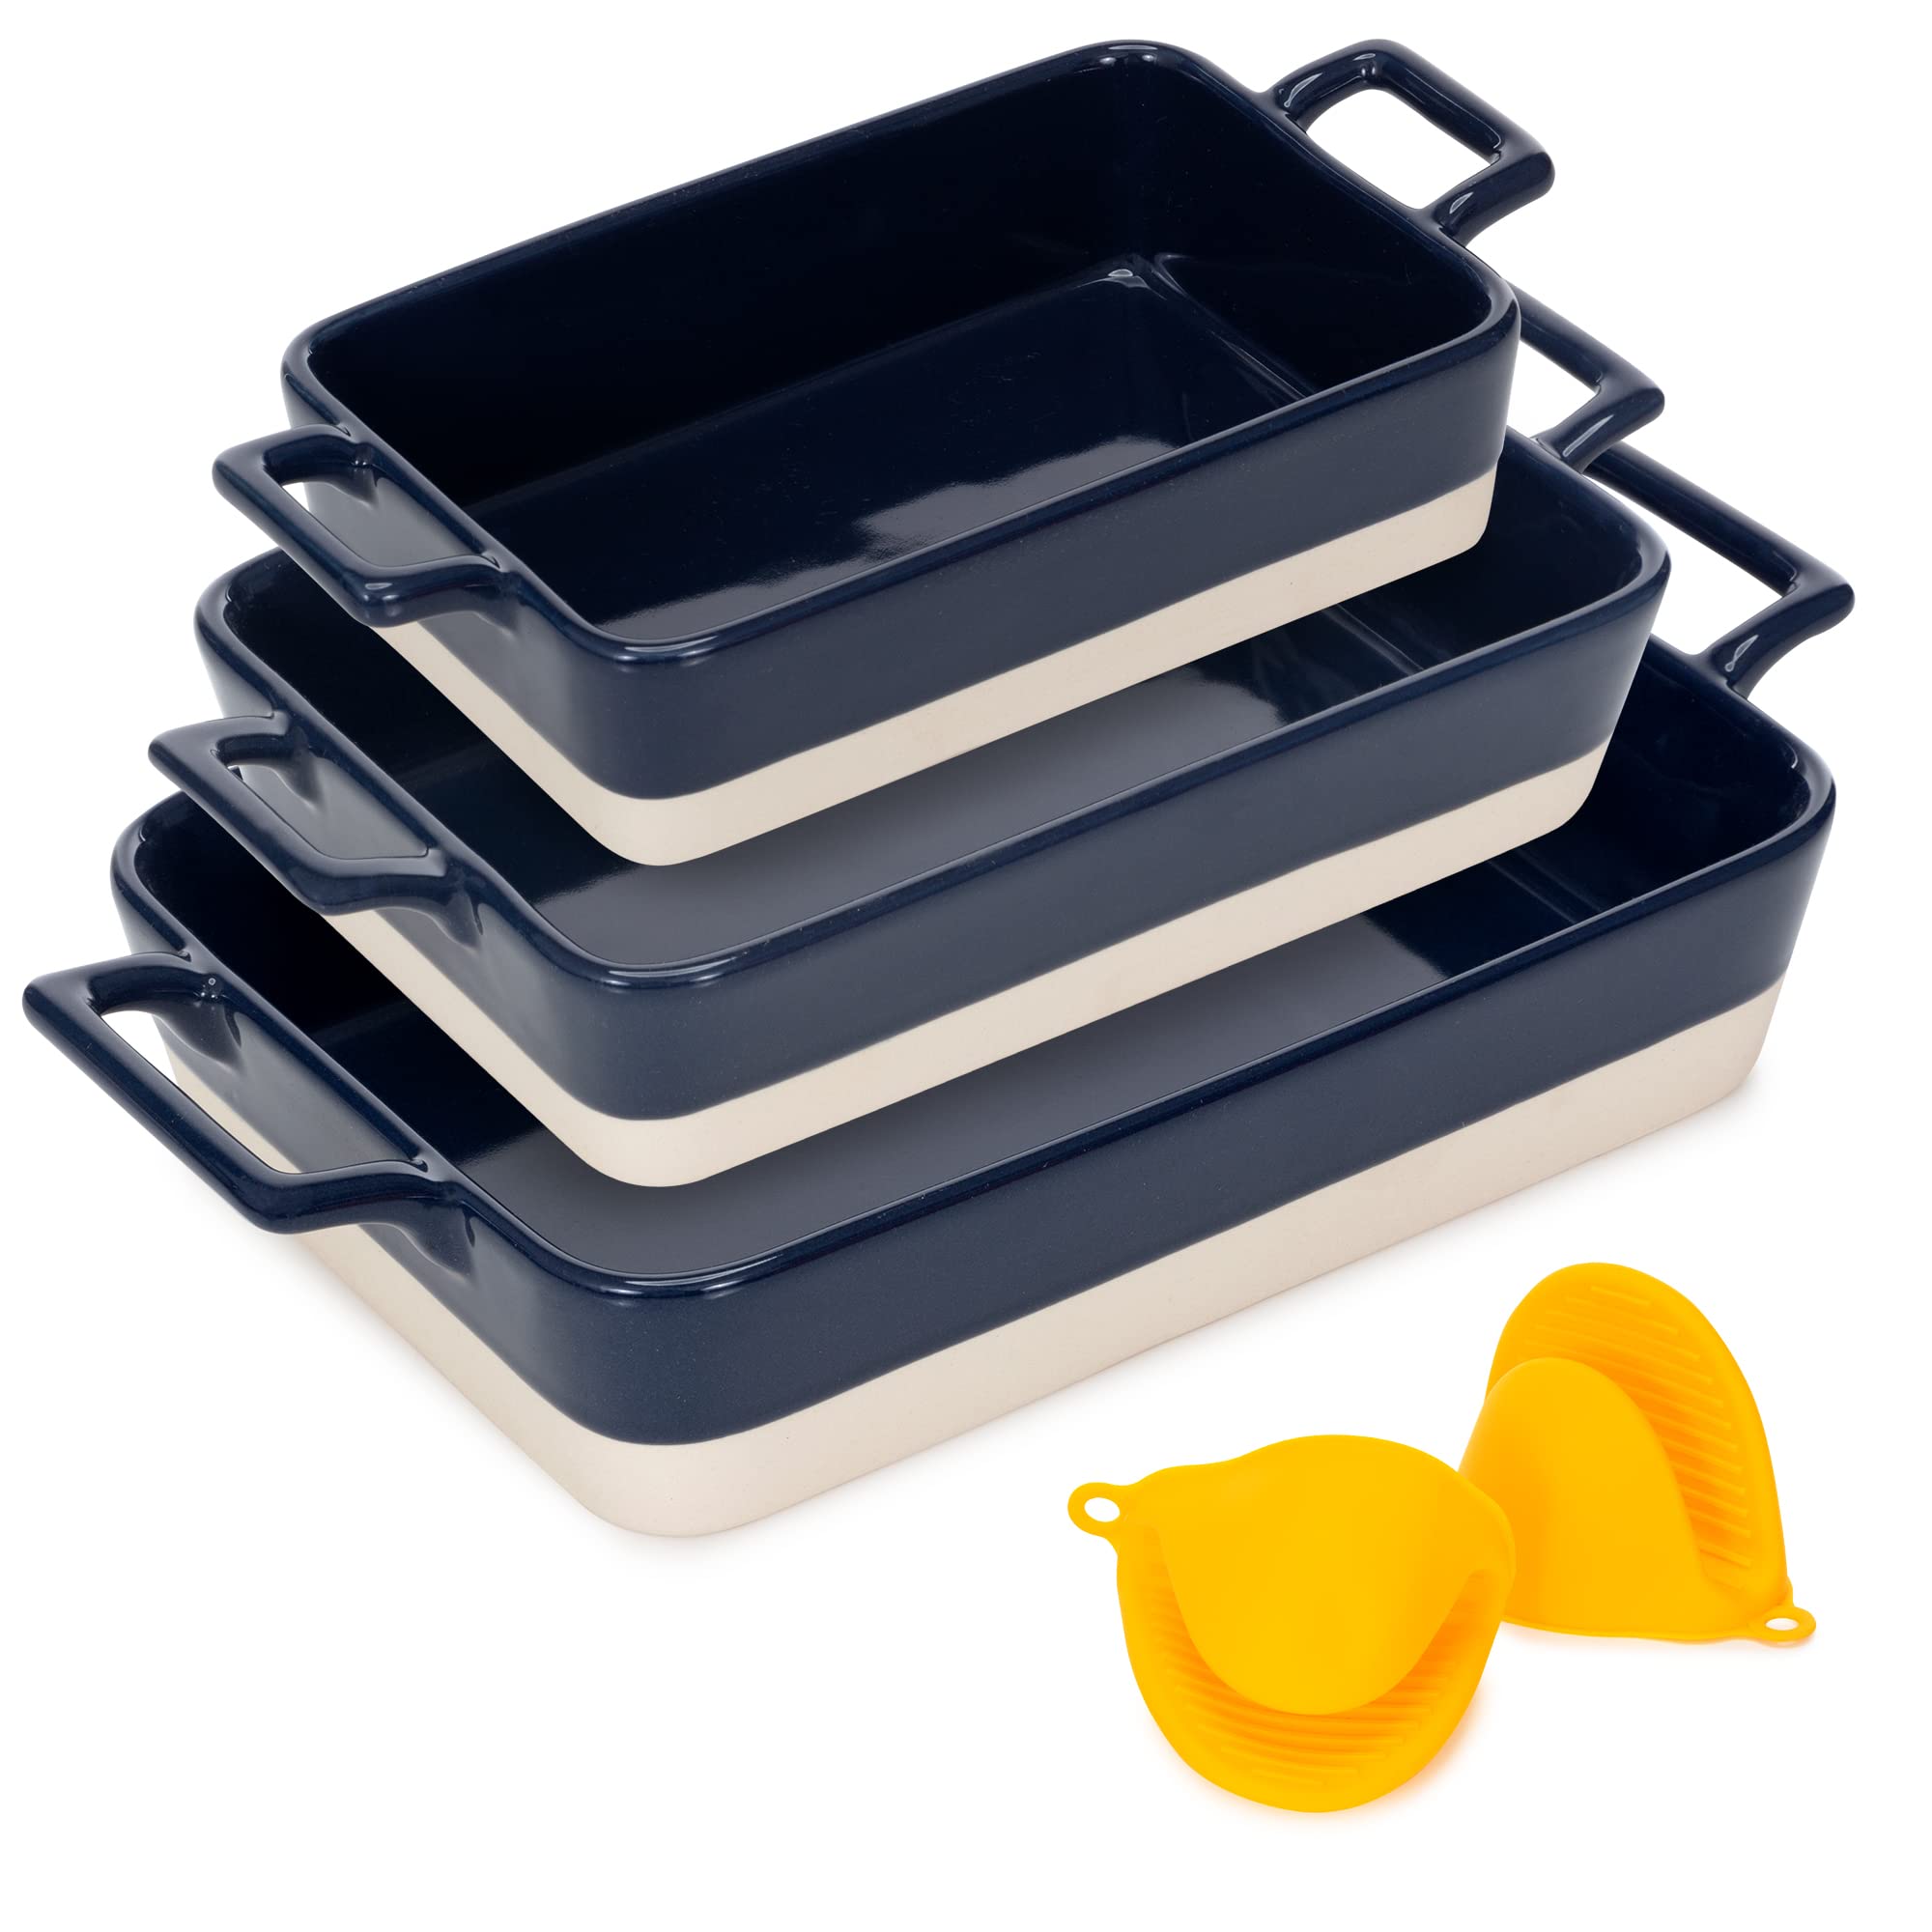 Casserole Dish Set 3 Ceramic Baking Dishes - Oven Bakeware Dishwasher Safe - L 10.0”x 7.0” x 2.0